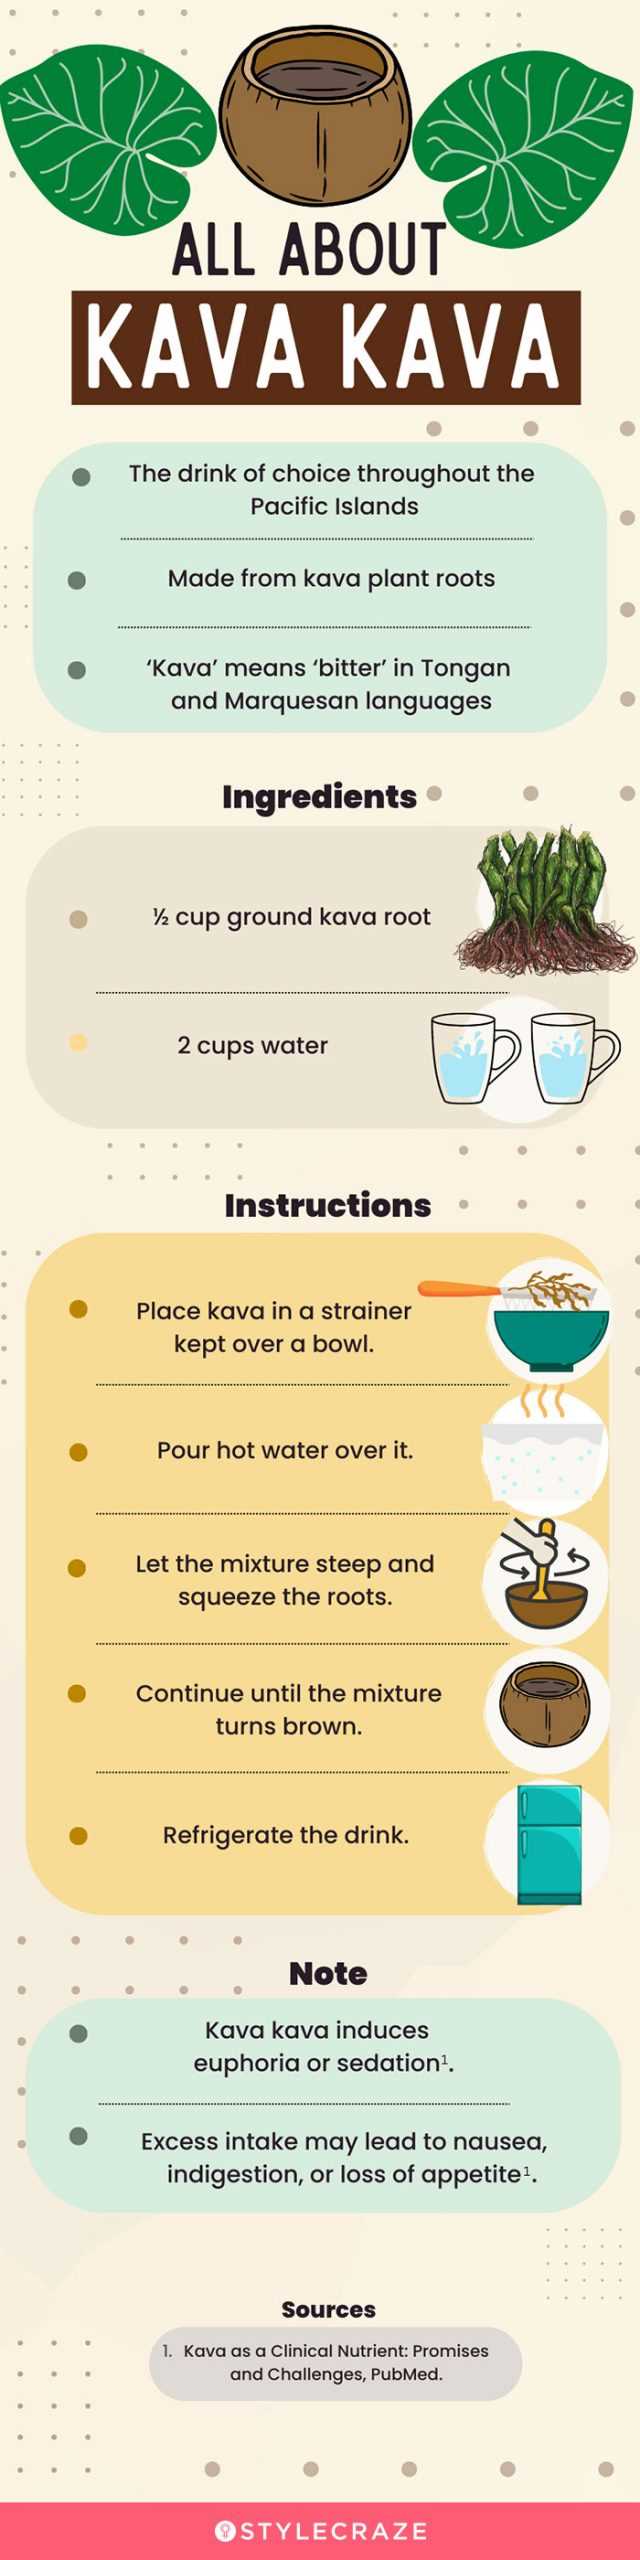 Step 1: Choosing the right kava powder